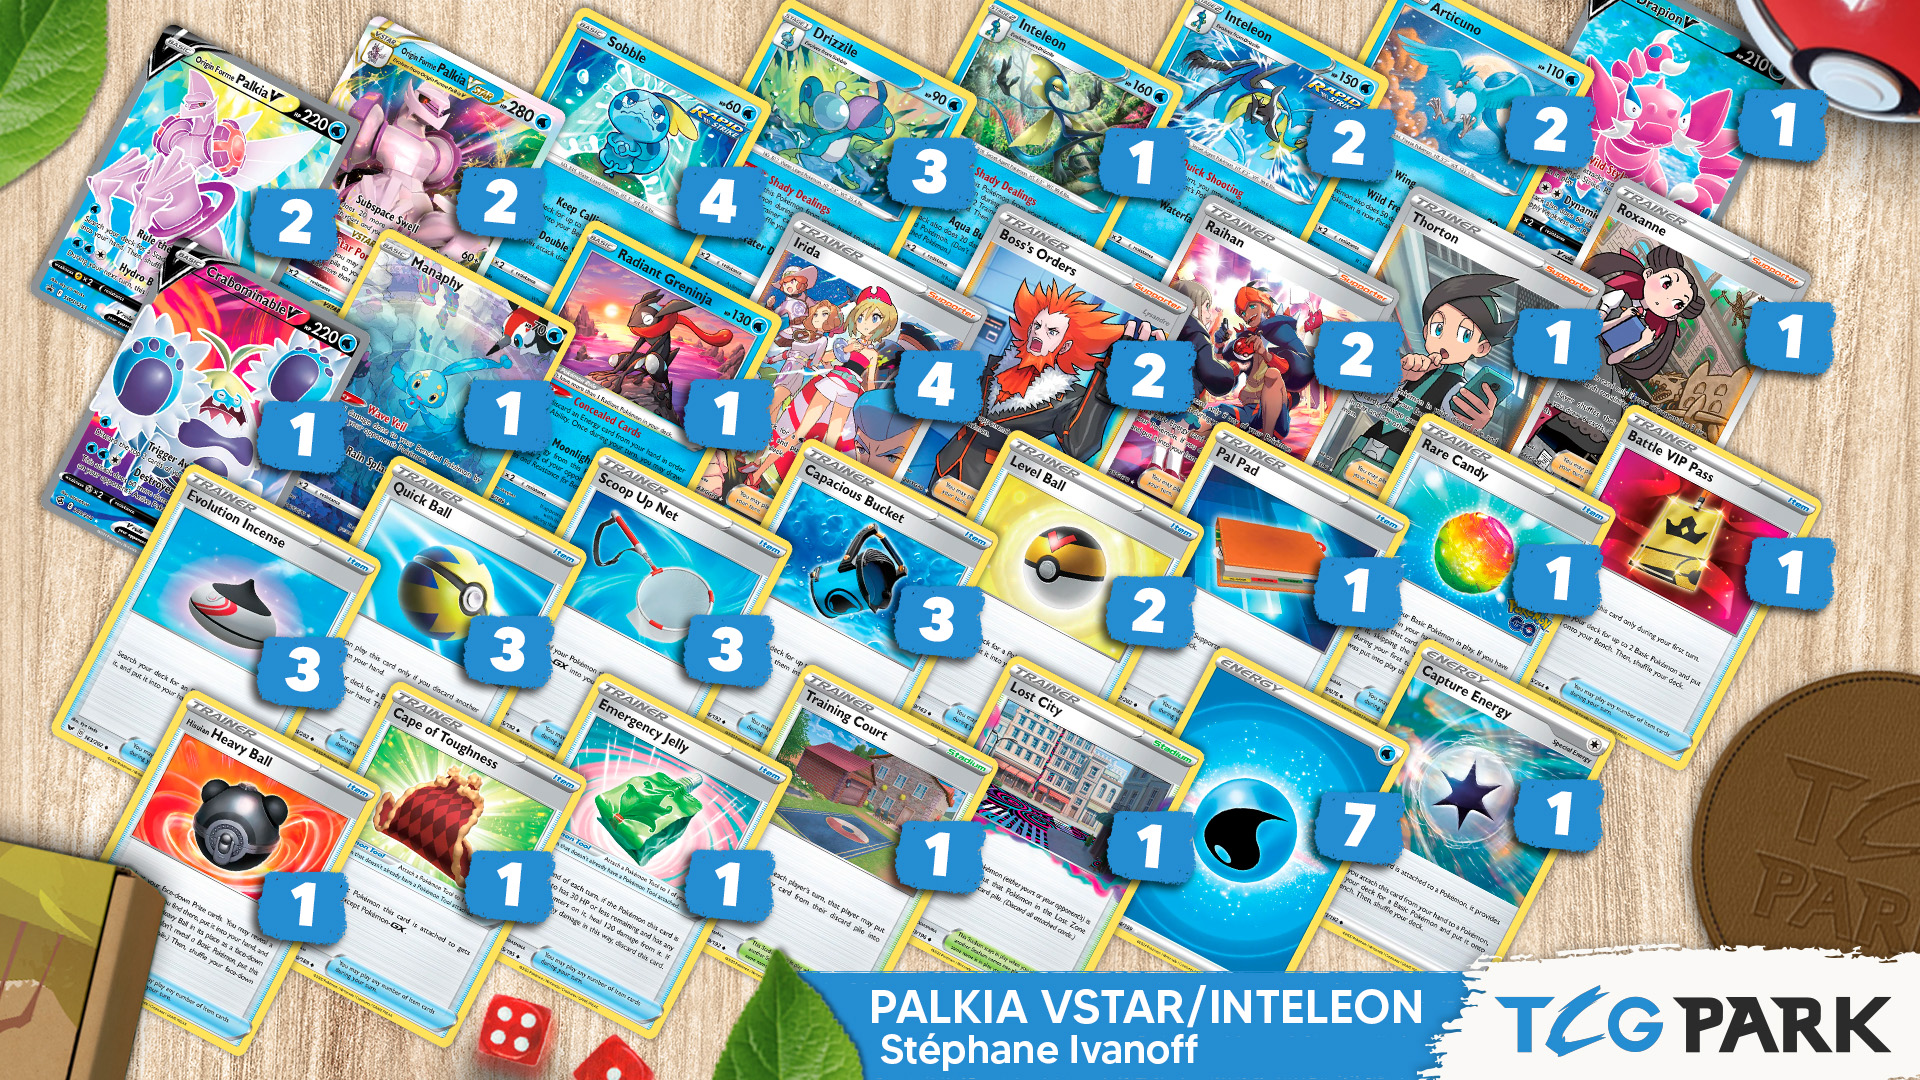 Stay in control with Palkia VSTAR / Inteleon!